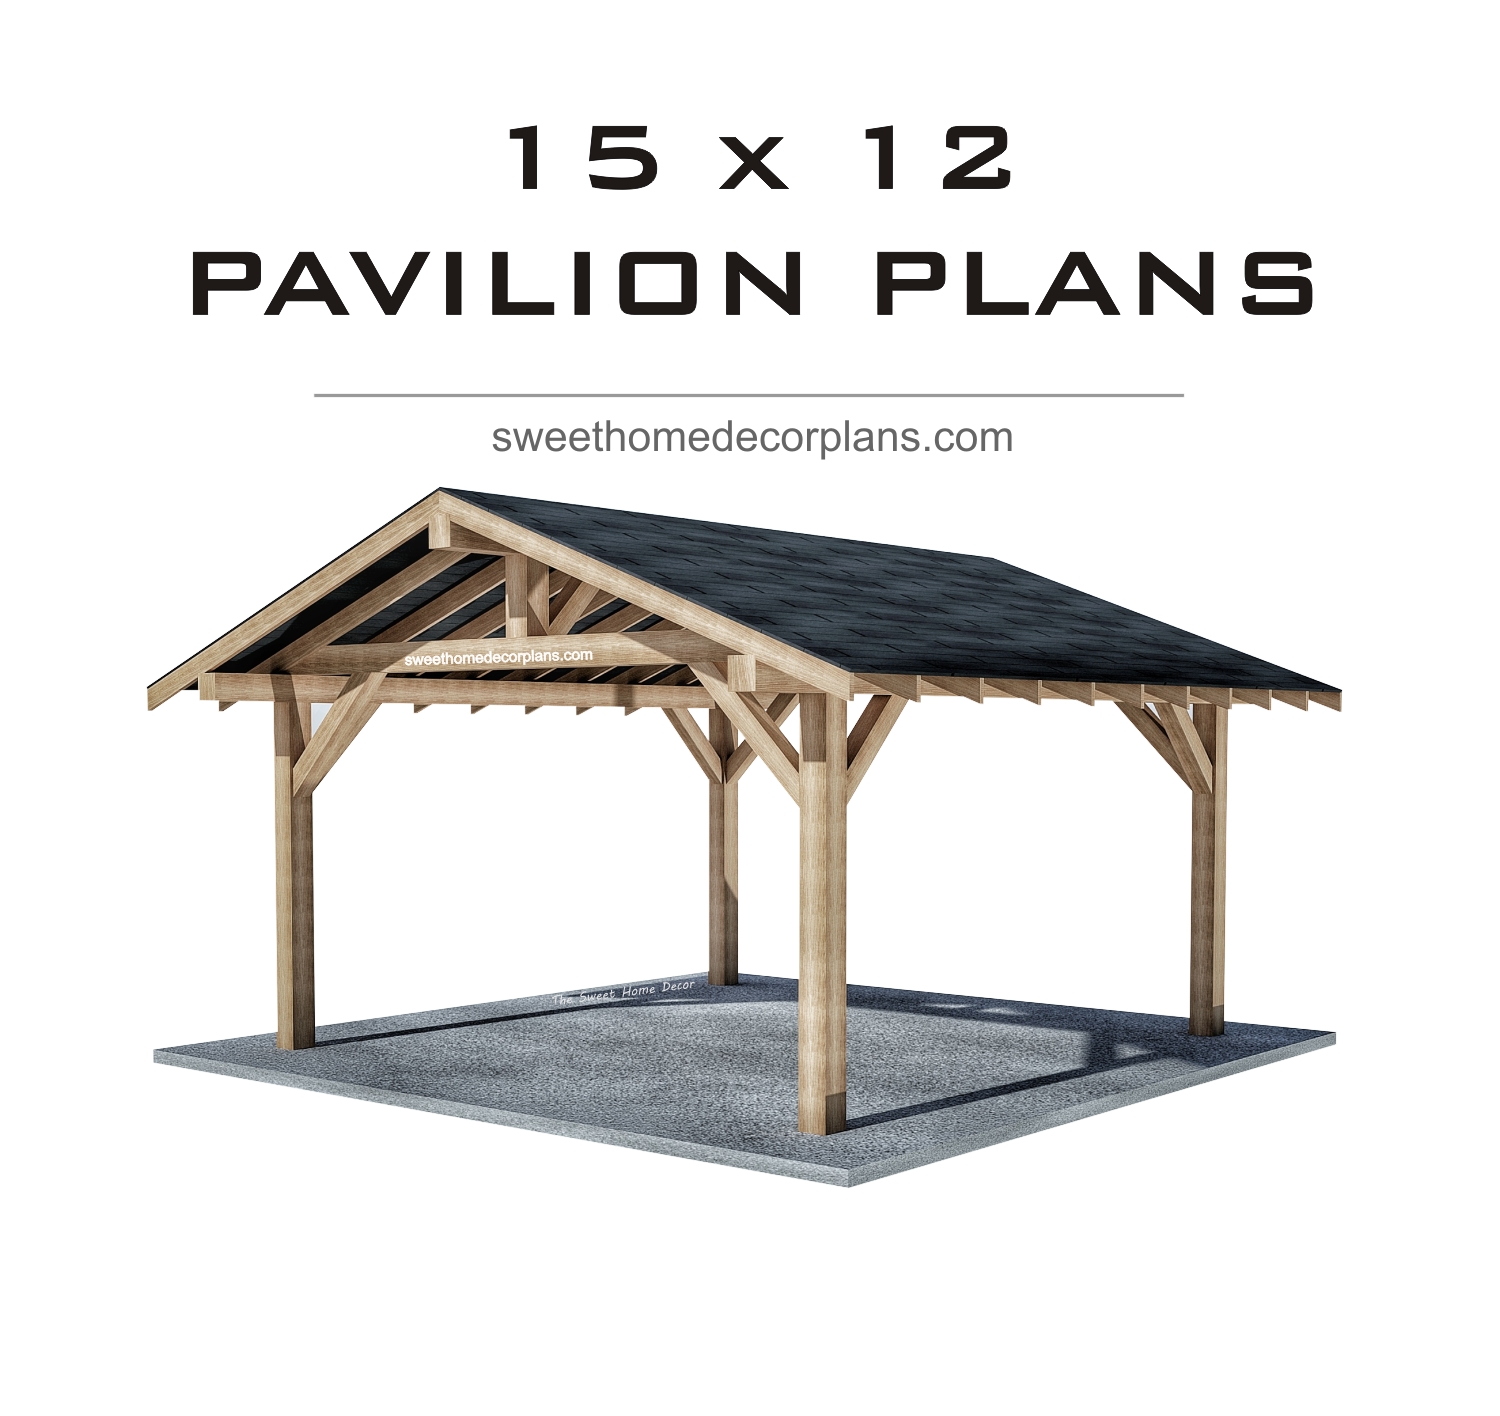 Diy-15-х-12-gable-pavilion-plans-carport-patio-pergola